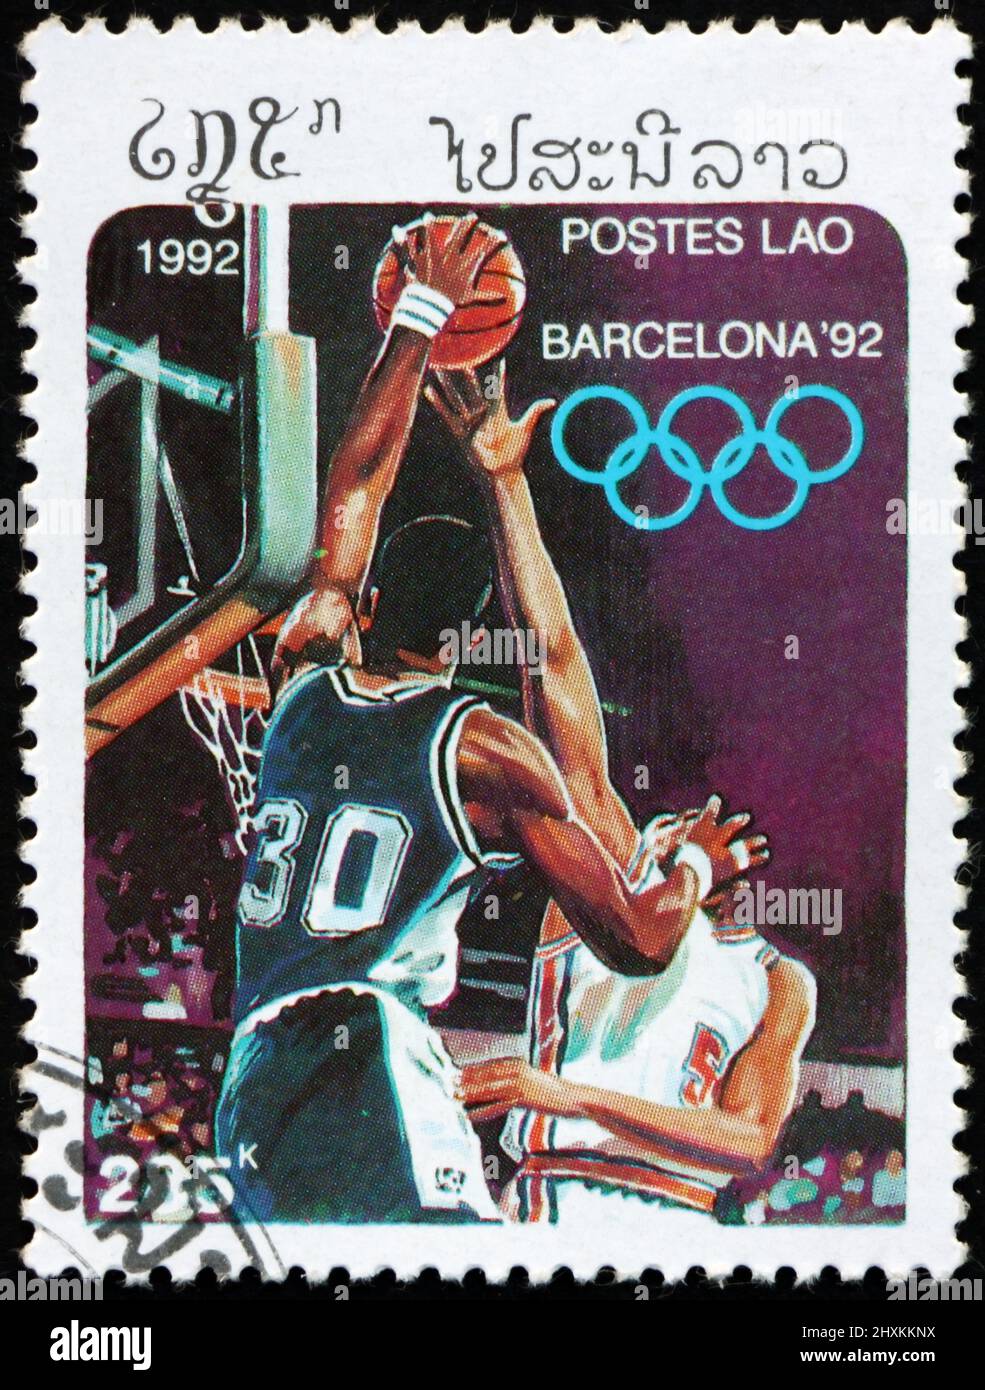 LAOS - CIRCA 1992: a stamp printed in Laos shows basketball, 1992 Summer Olympics, Barcelona, circa 1992 Stock Photo